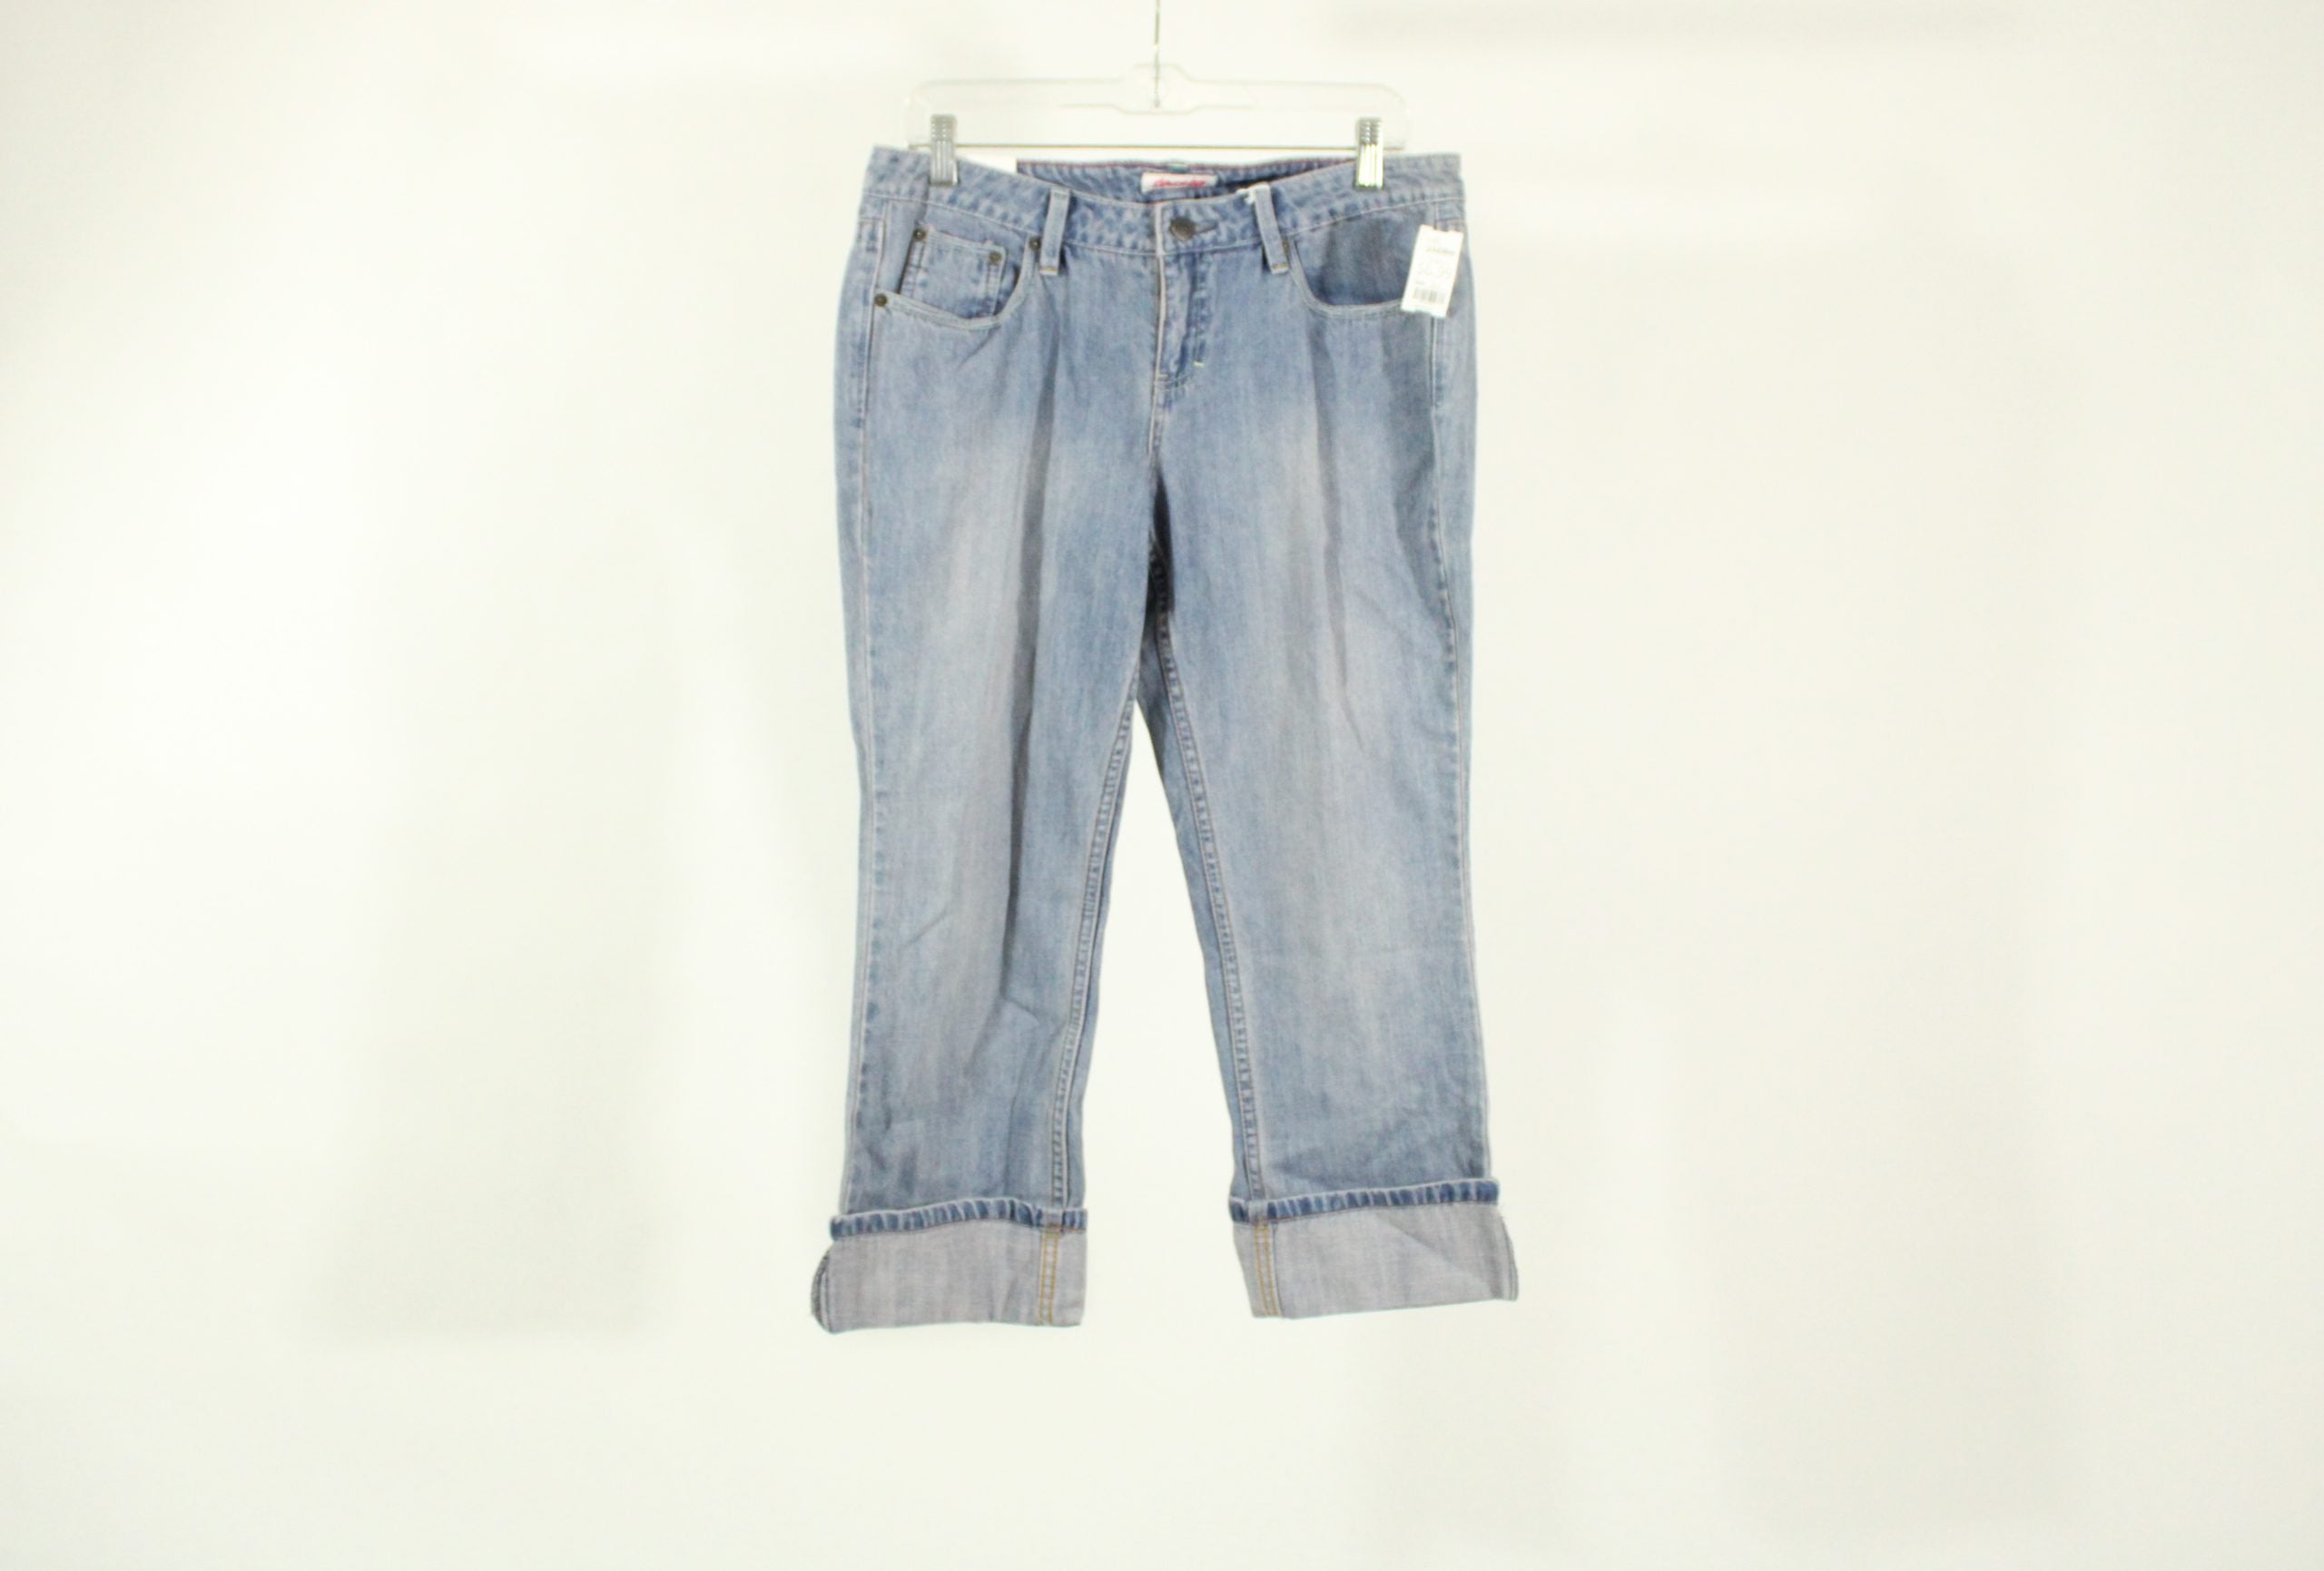 NEW Dear AB Crop Jeans | Size 10